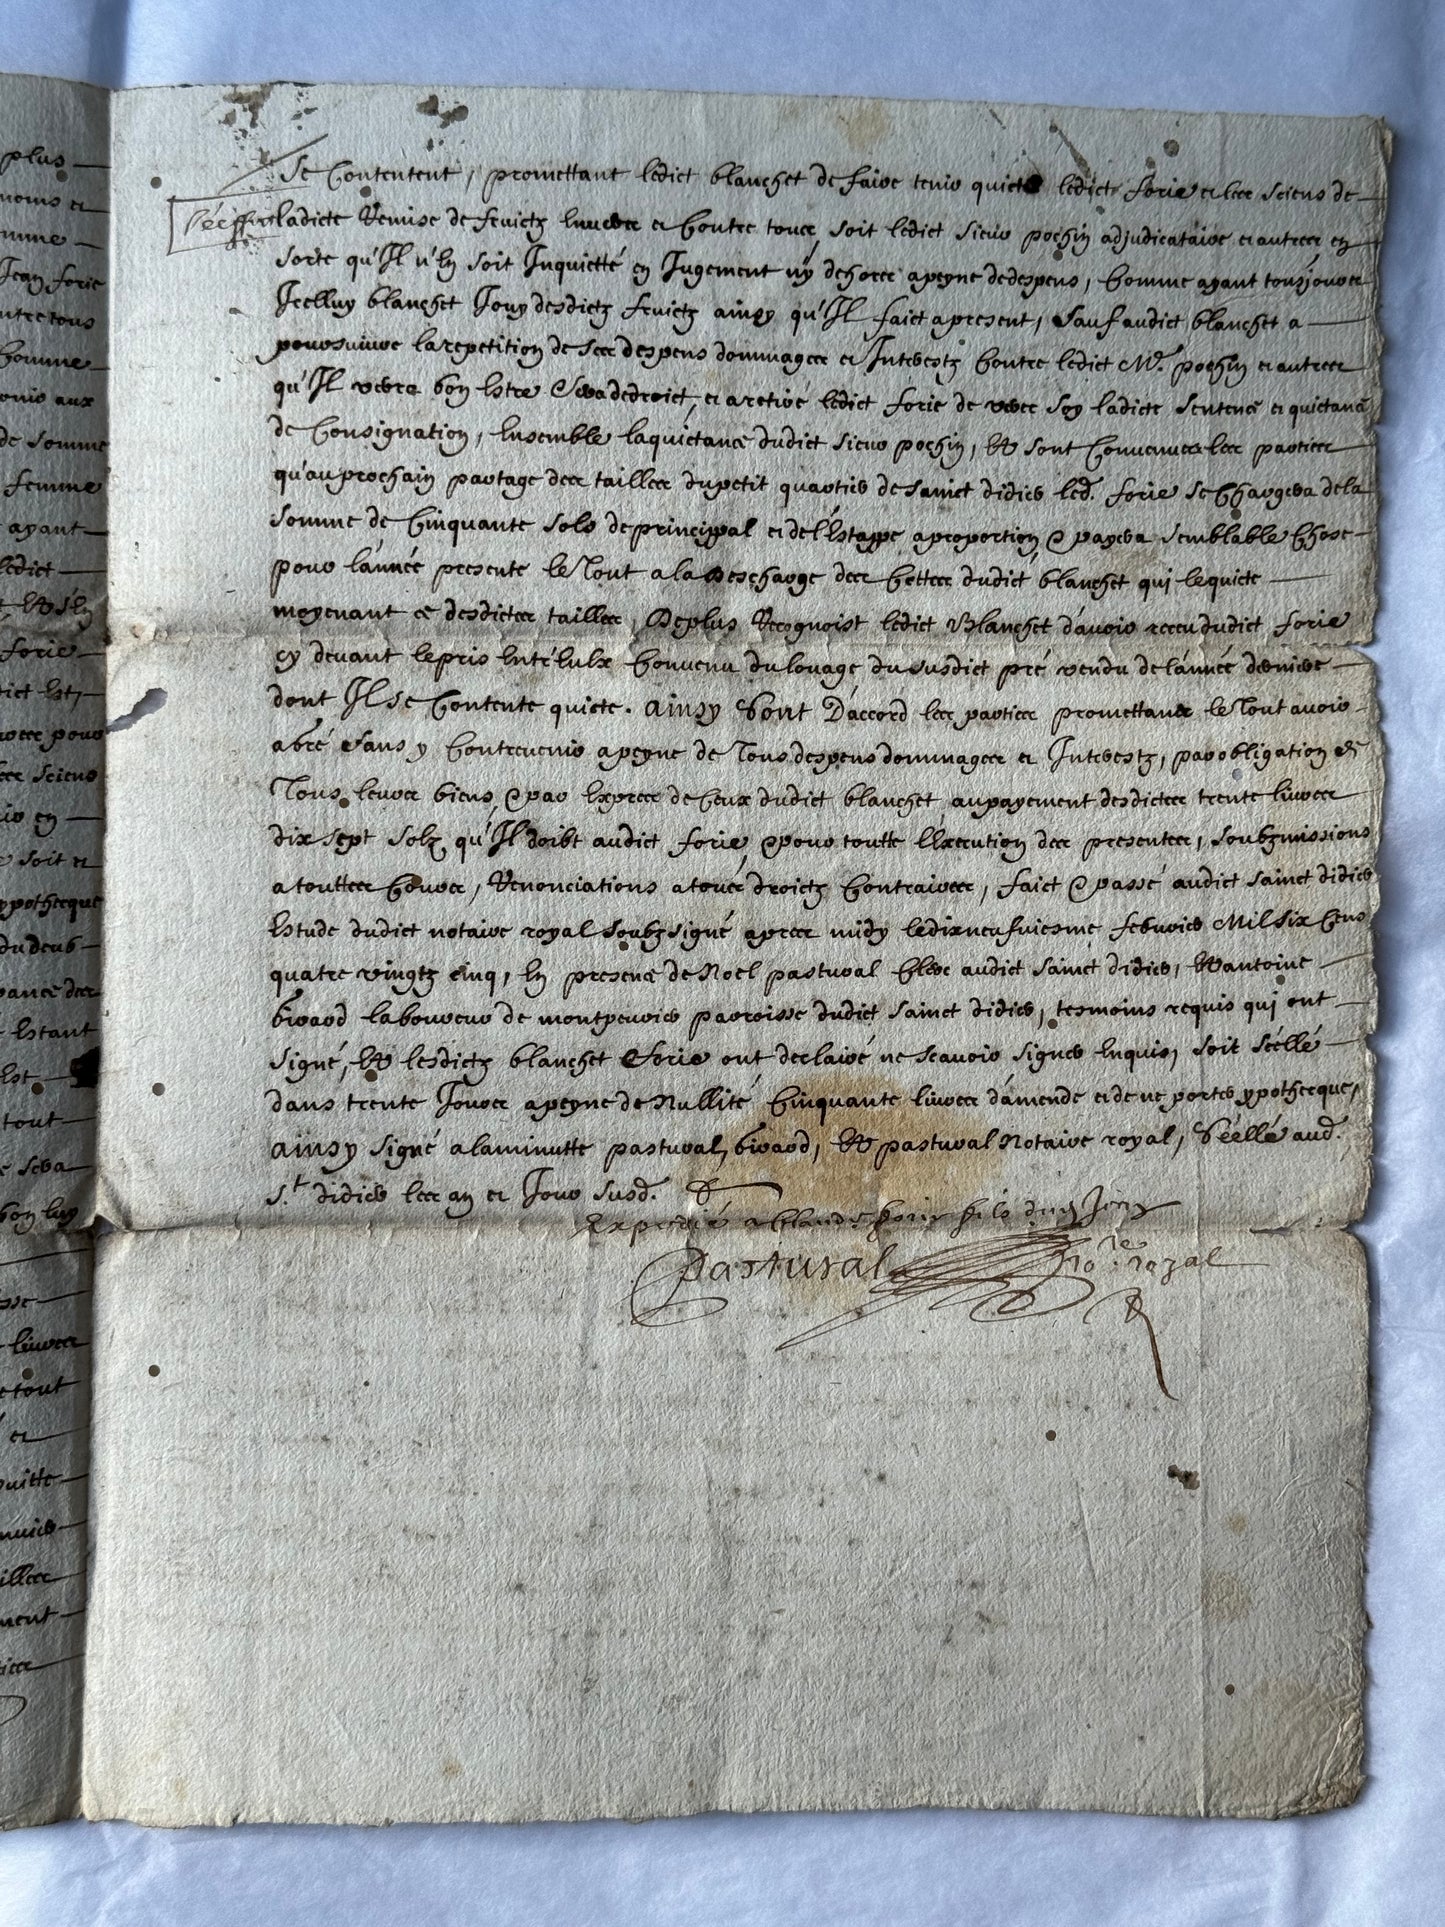 1685 French Manuscript